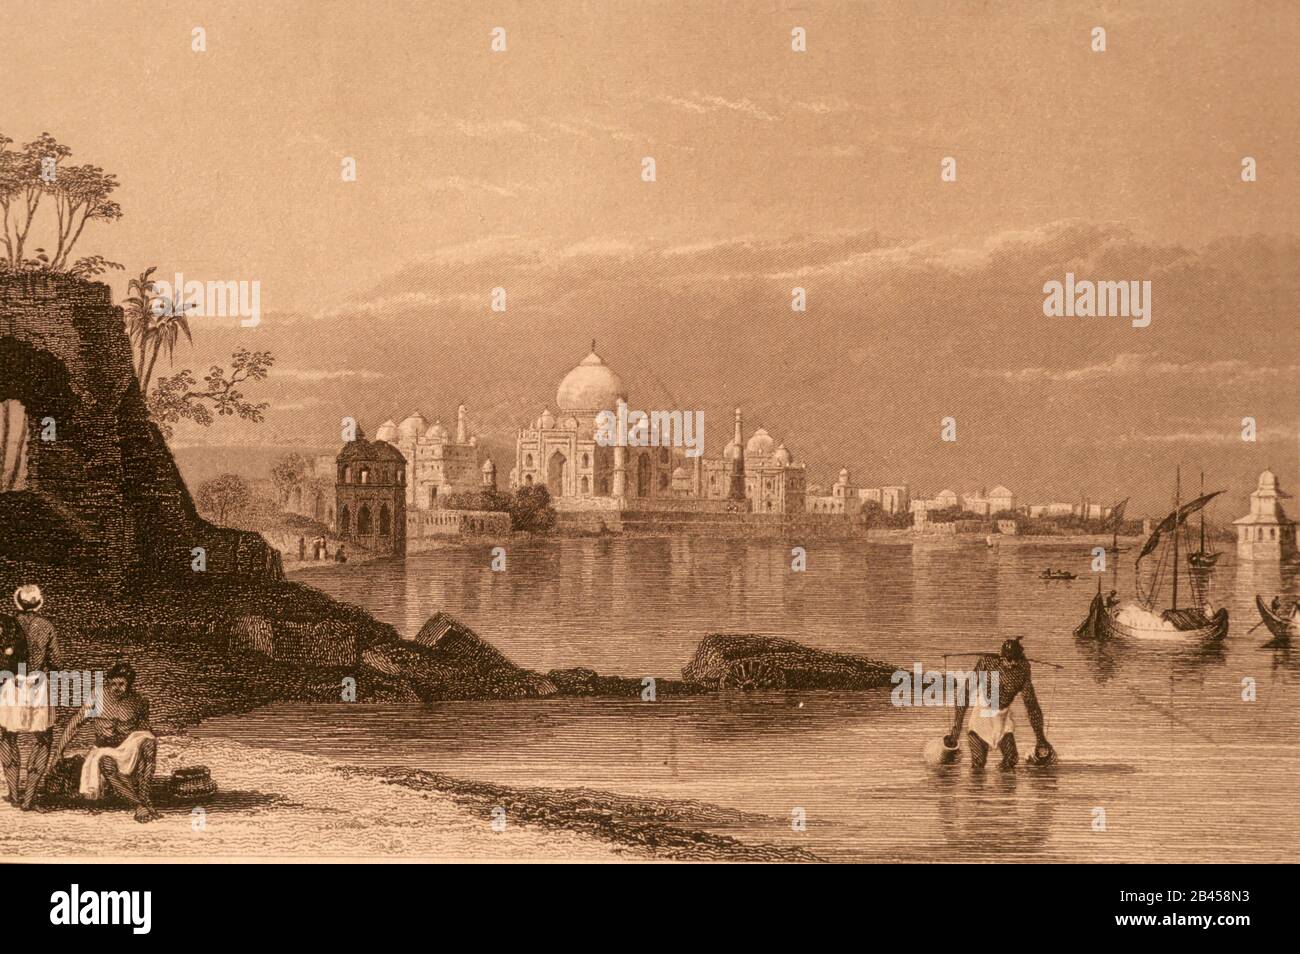 Taj Mahal, agra, uttar pradesh, India, Asia, vecchia litografia del 1800 Foto Stock